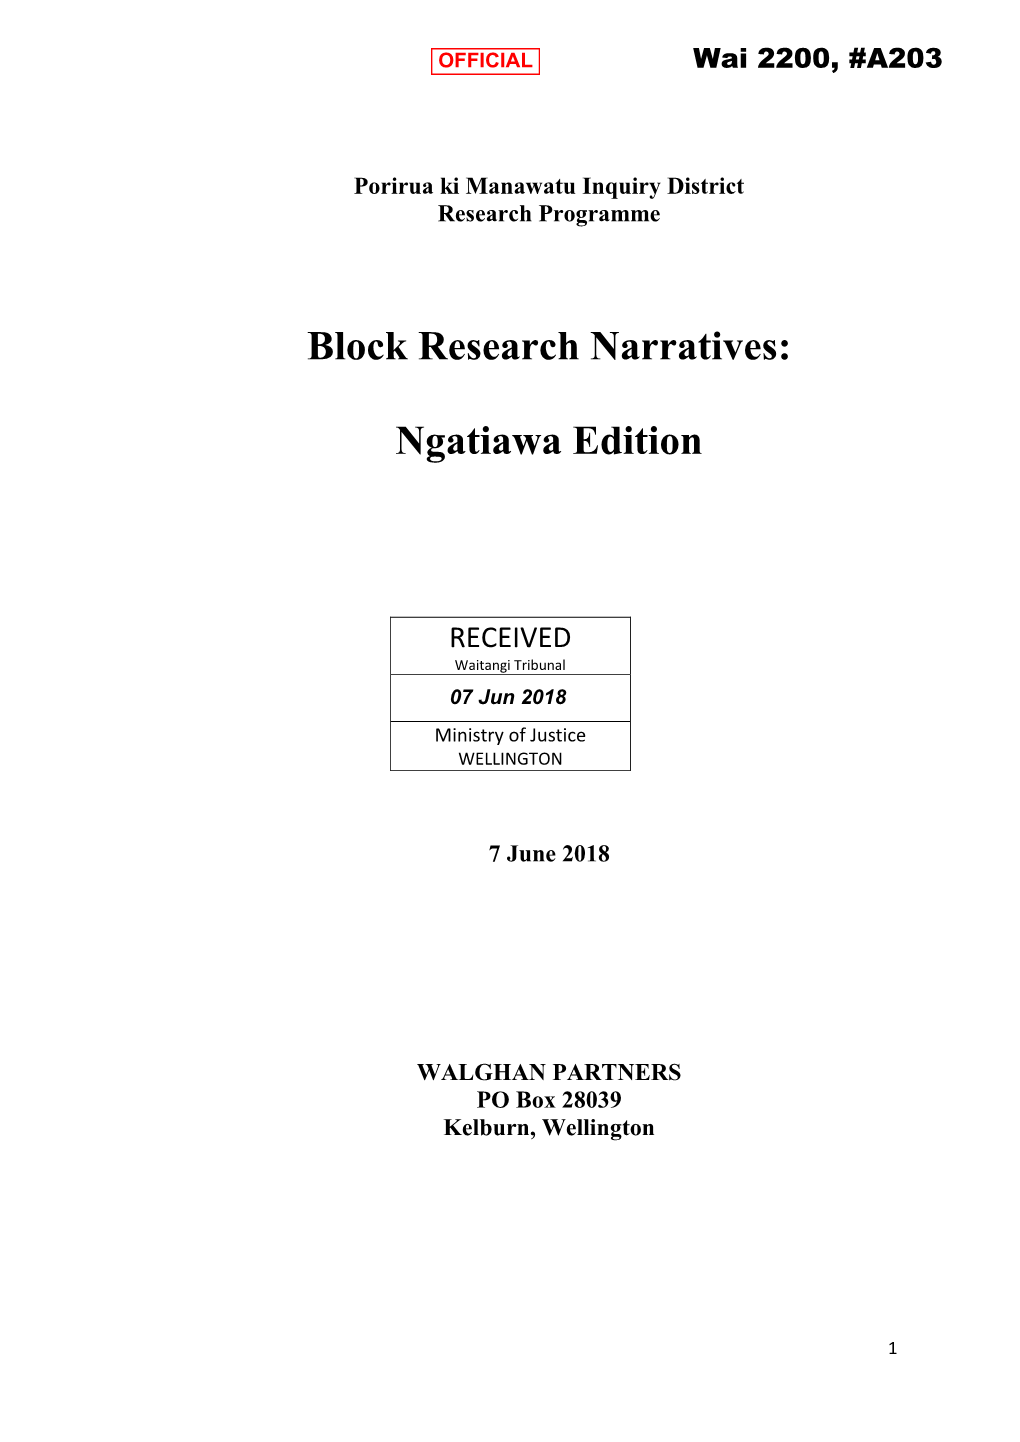 Block Research Narratives: Ngatiawa Edition